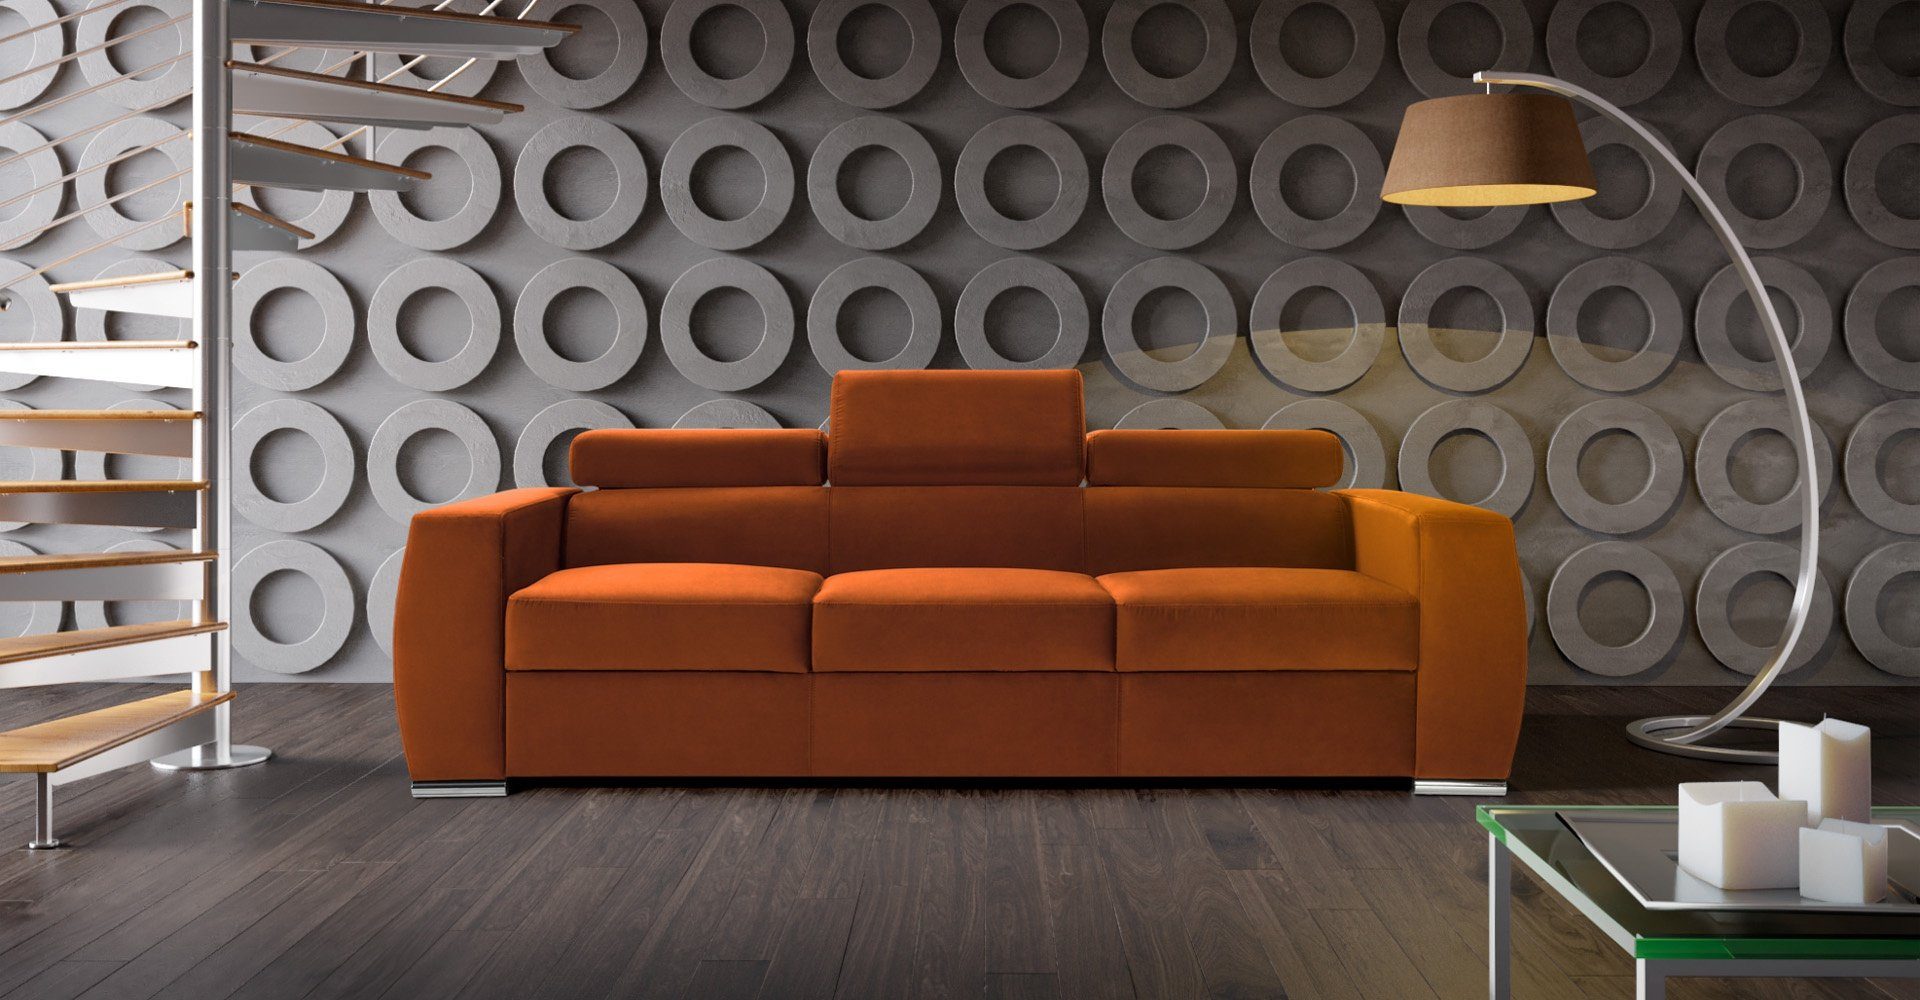 JVmoebel Orange Bettfunktion Sofagarnitur Sitzer, Stoff Bettfunktion. Polster Sofa Mit Design Sofas 3+3